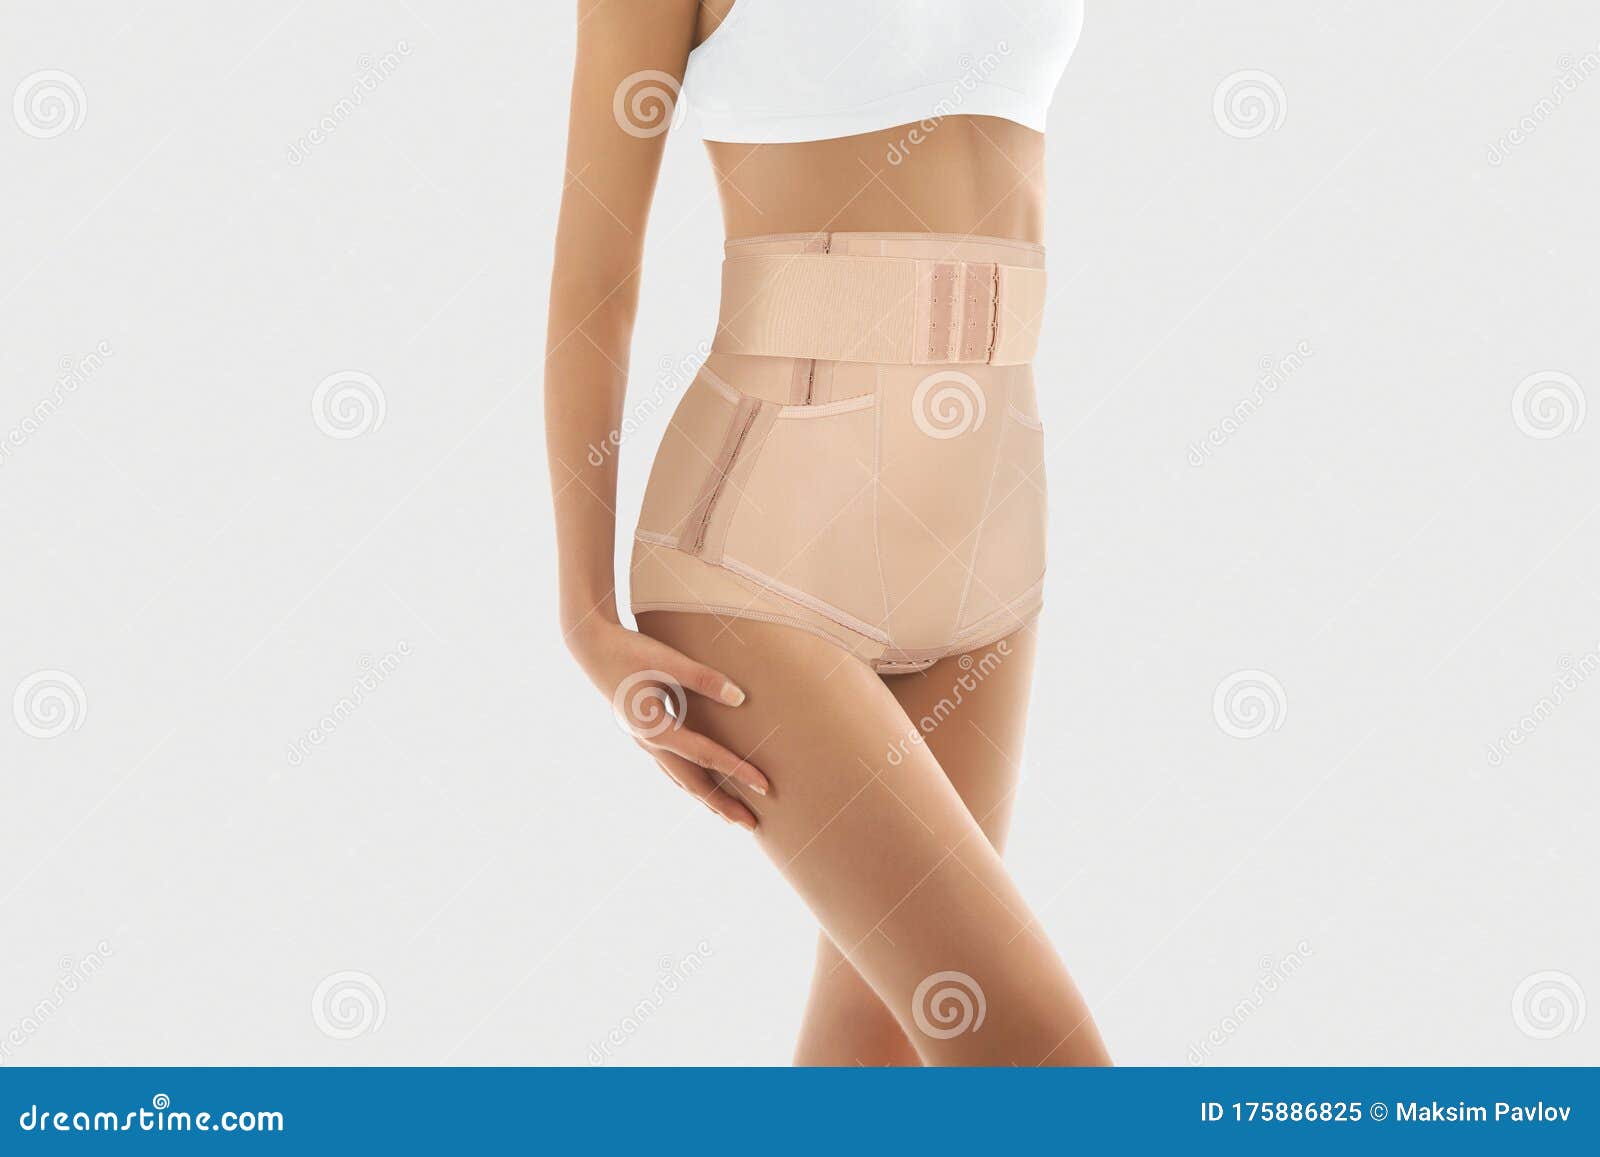 https://thumbs.dreamstime.com/z/postnatal-bandage-medical-compression-underwear-orthopedic-underpants-lowering-pelvic-organs-postpartum-tummy-control-175886825.jpg